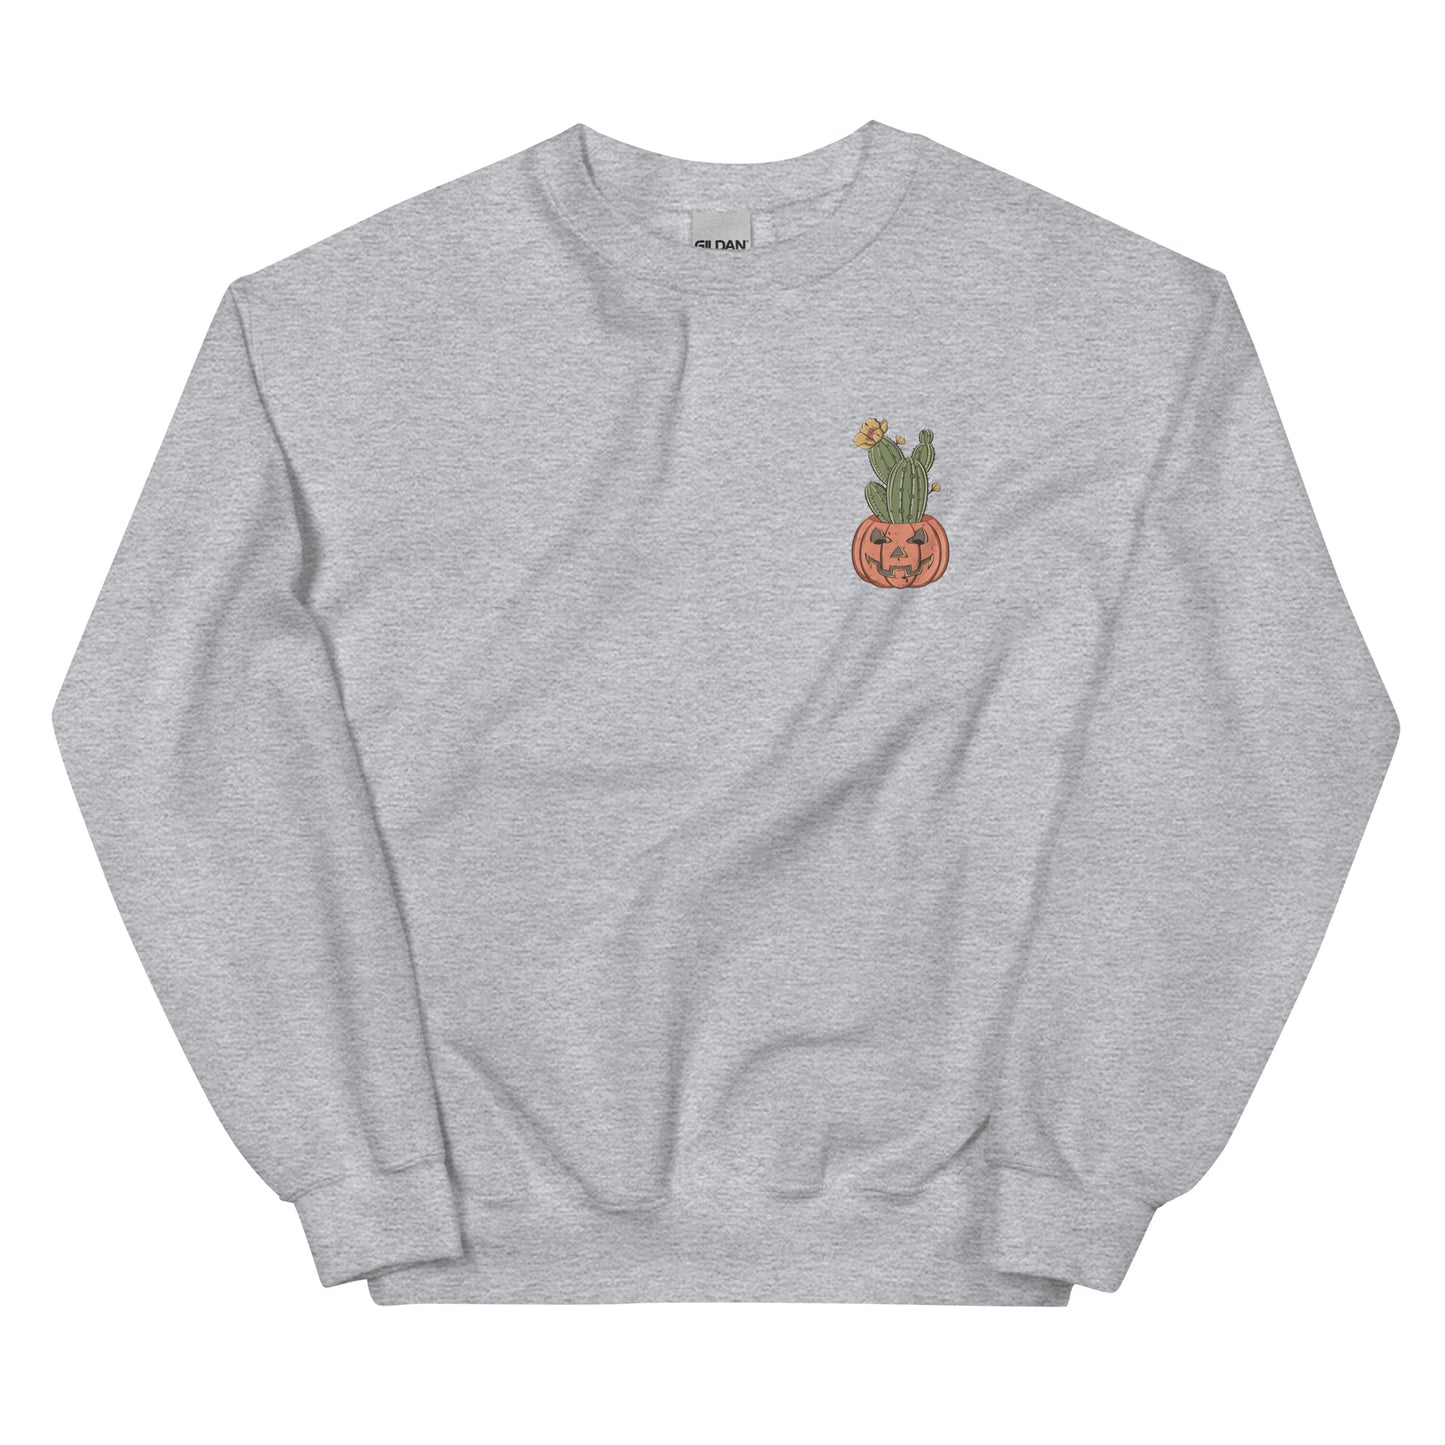 "Go Fall On a Cactus" Sweatshirt